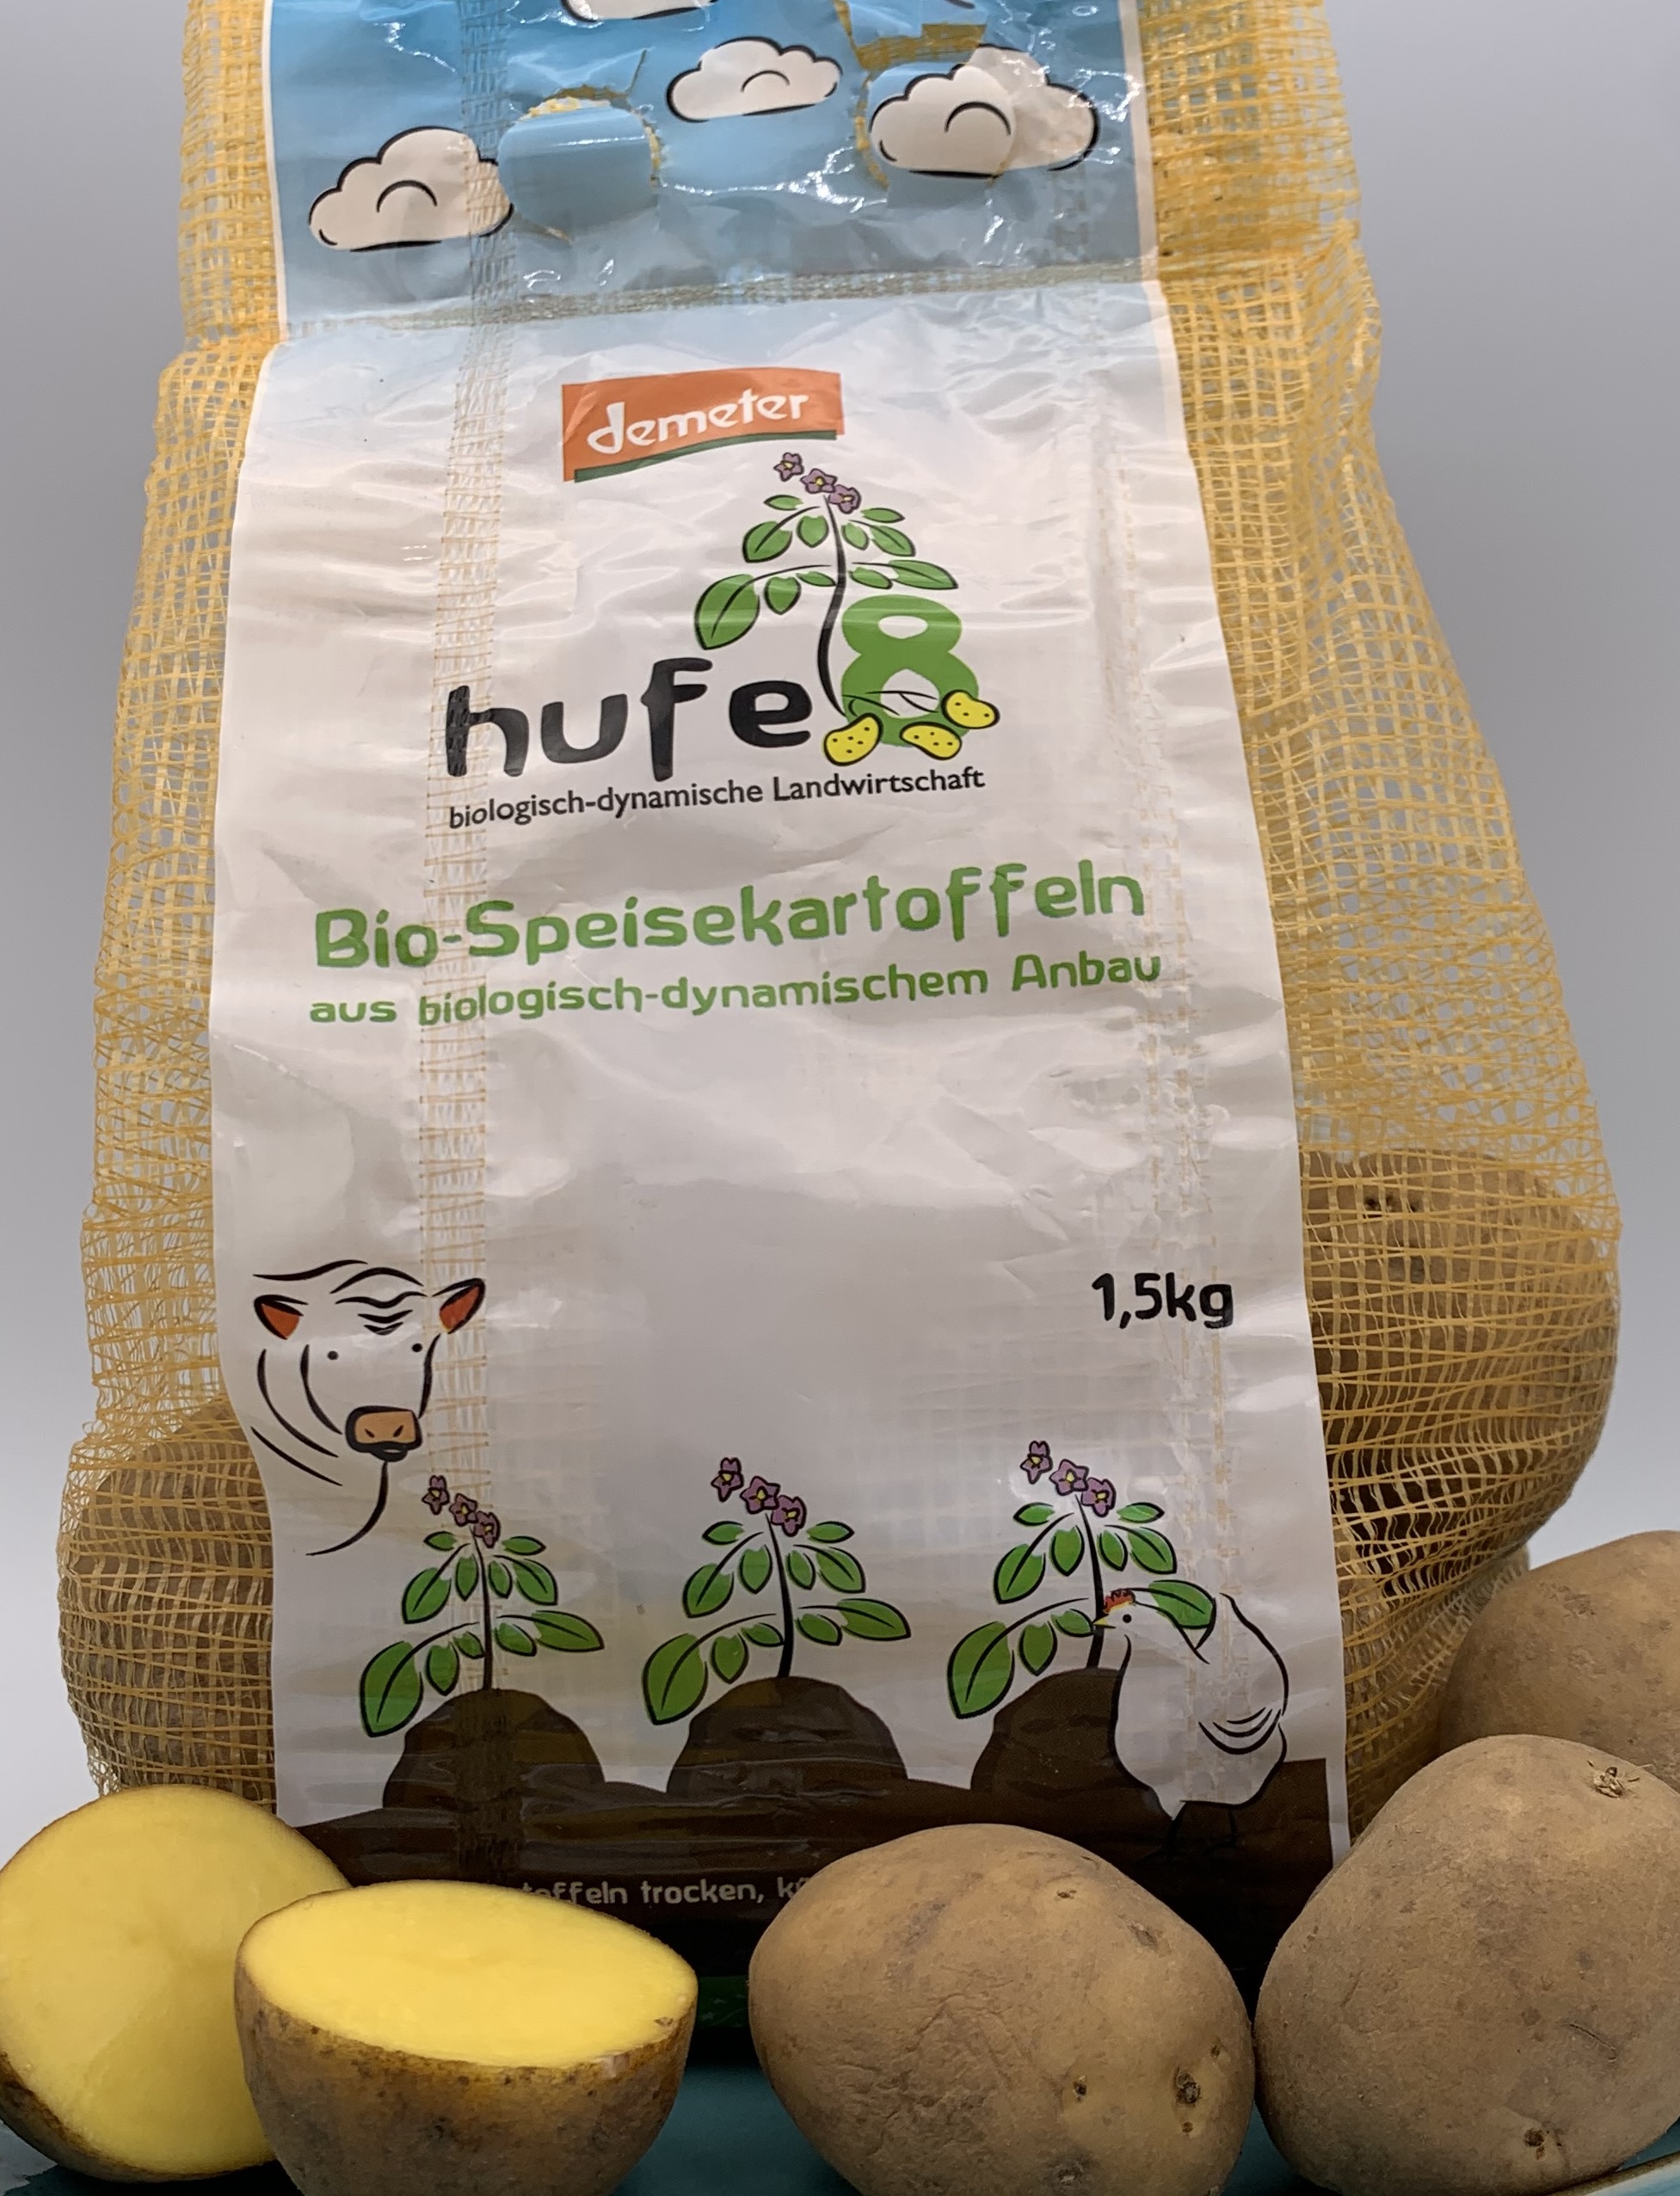 Kartoffeln 1,5kg | Kartoffeln | Acker | Hufe8 Onlineshop